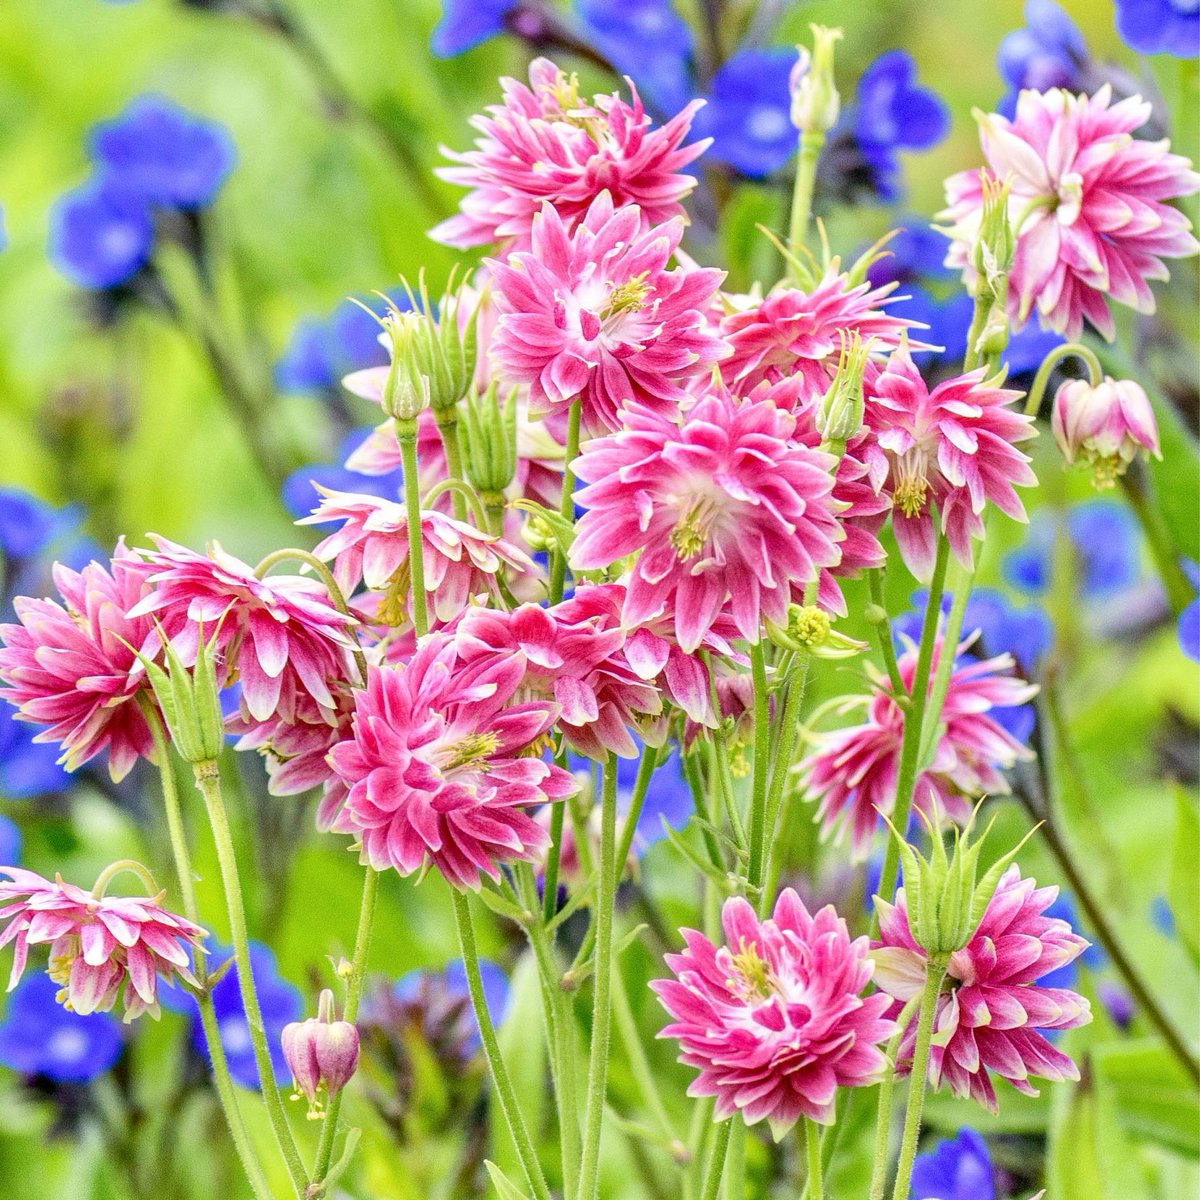 'Spring unlocks the flowers to paint the laughing soil.' - Reginald Heber (1783-1826). #flowers #gardening